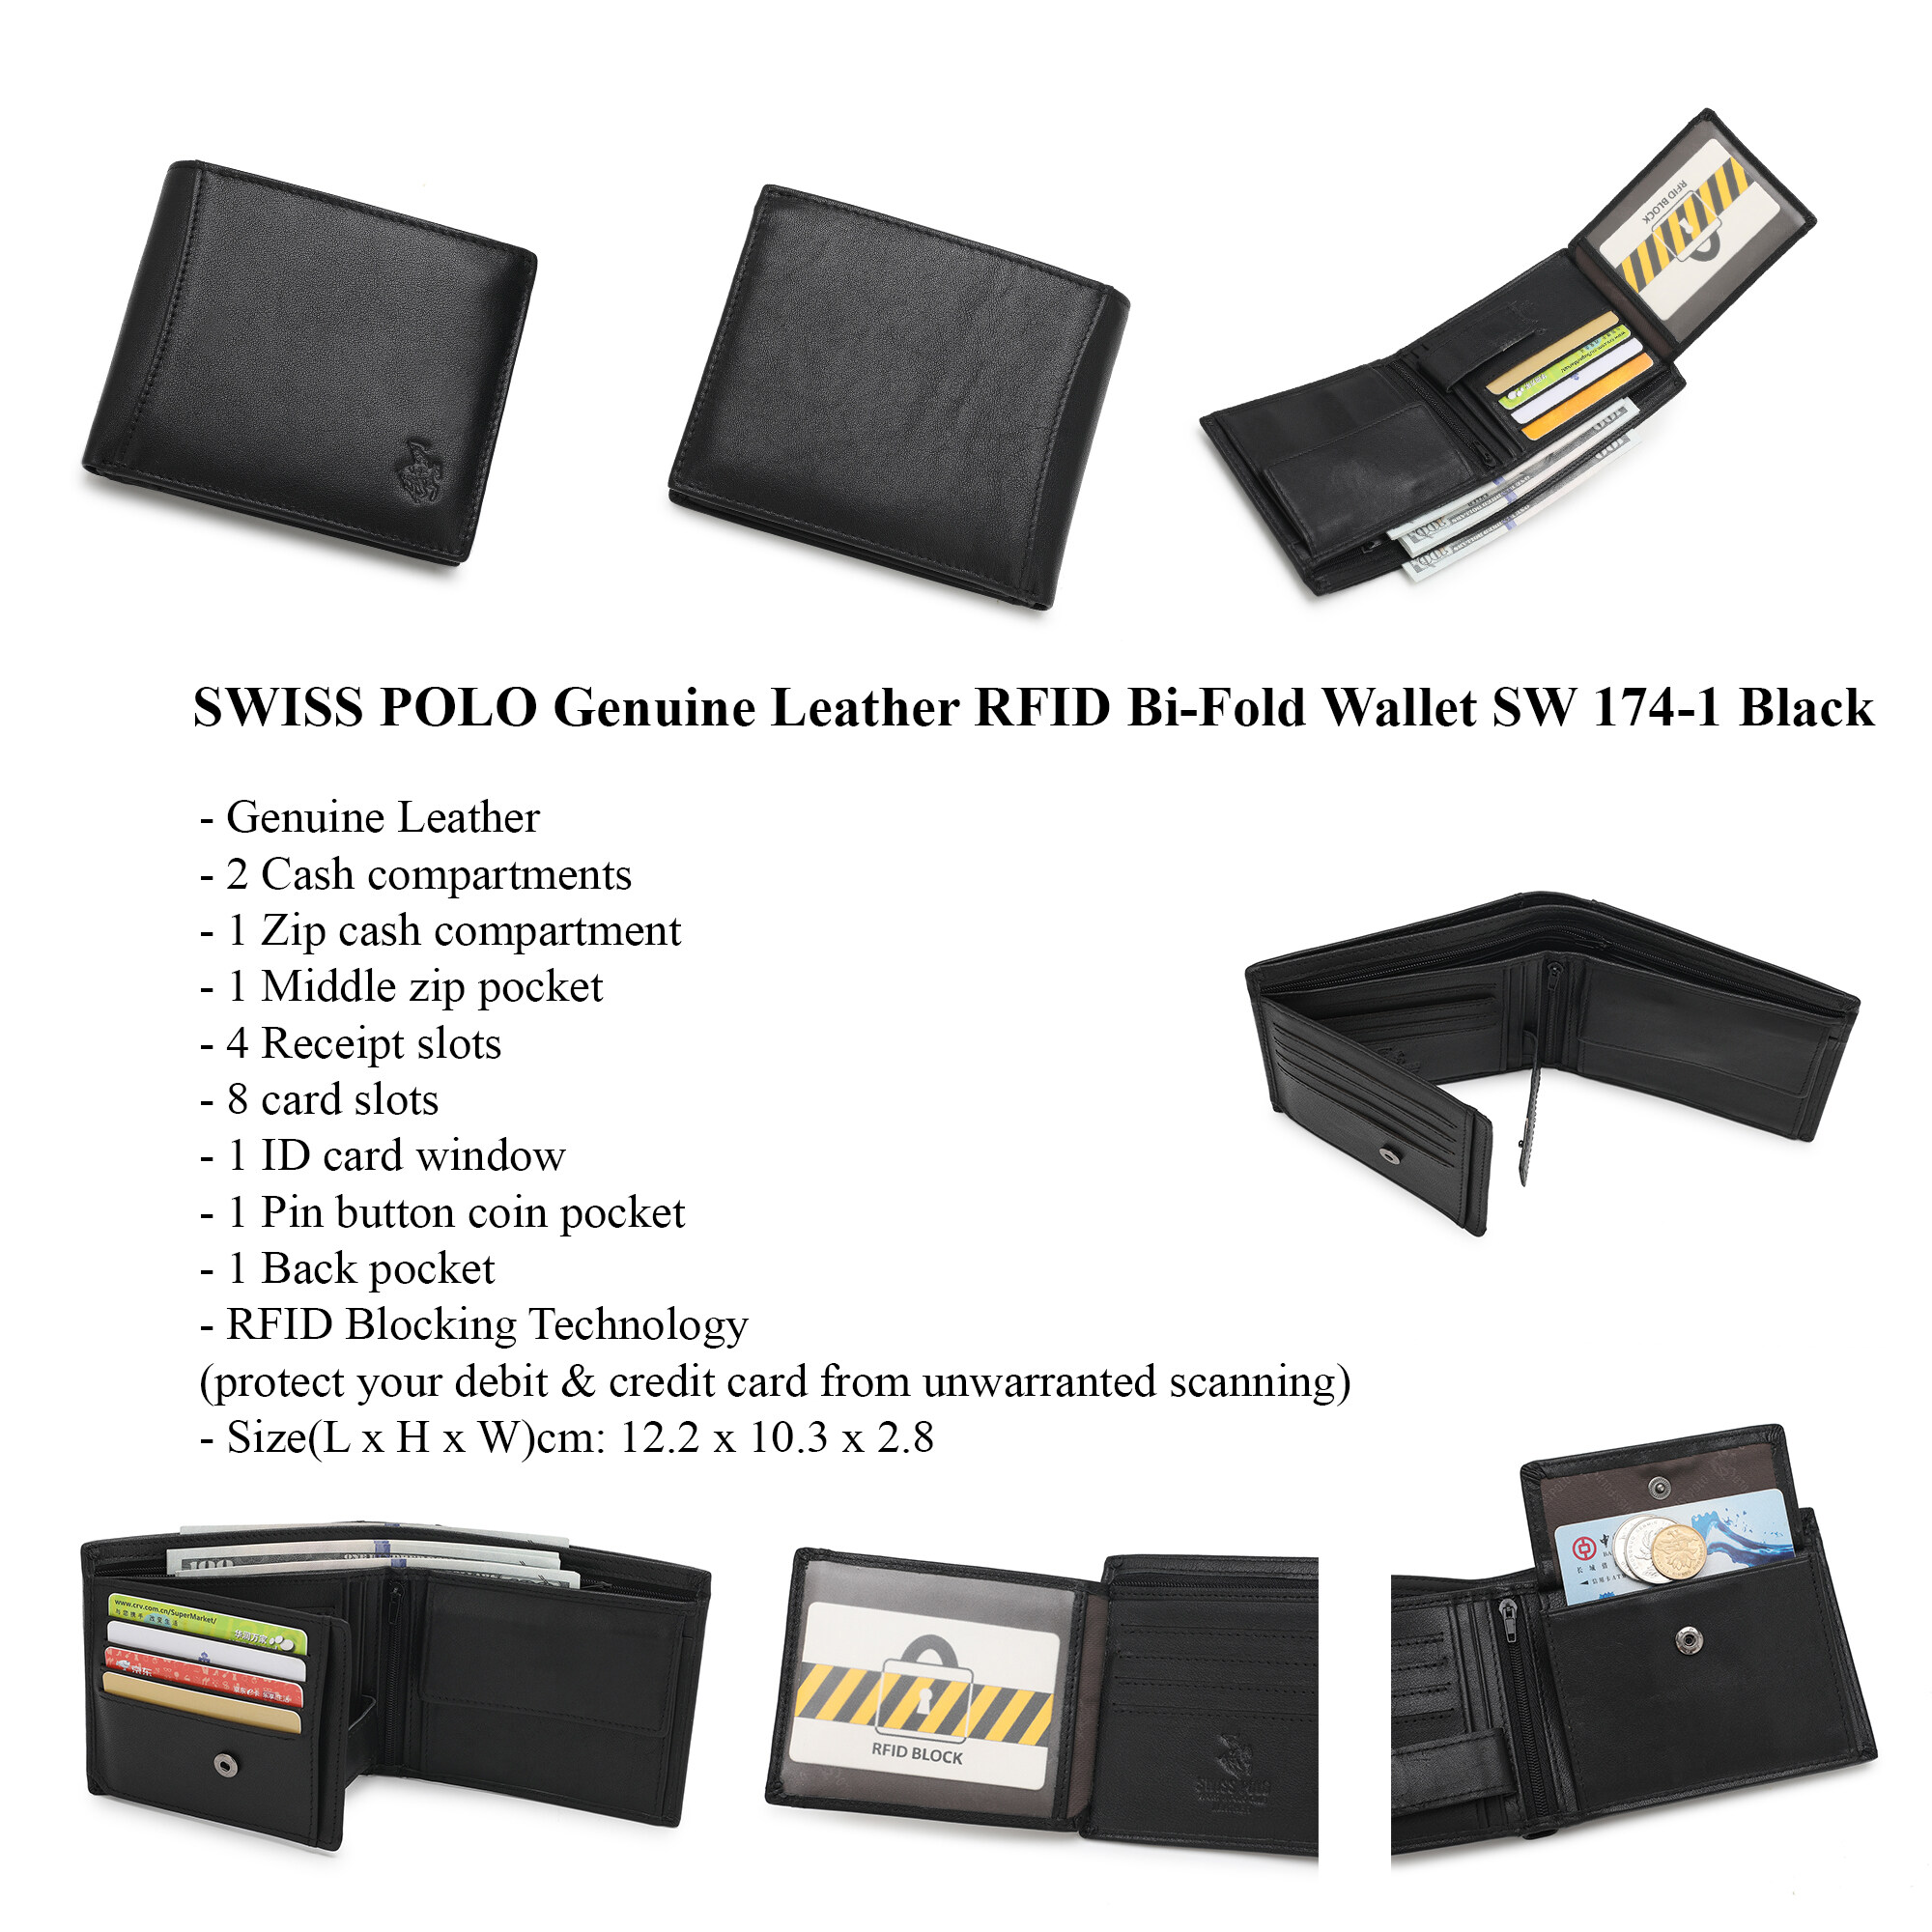 SWISS POLO Genuine Leather RFID Short Wallet SW 174-1 BLACK